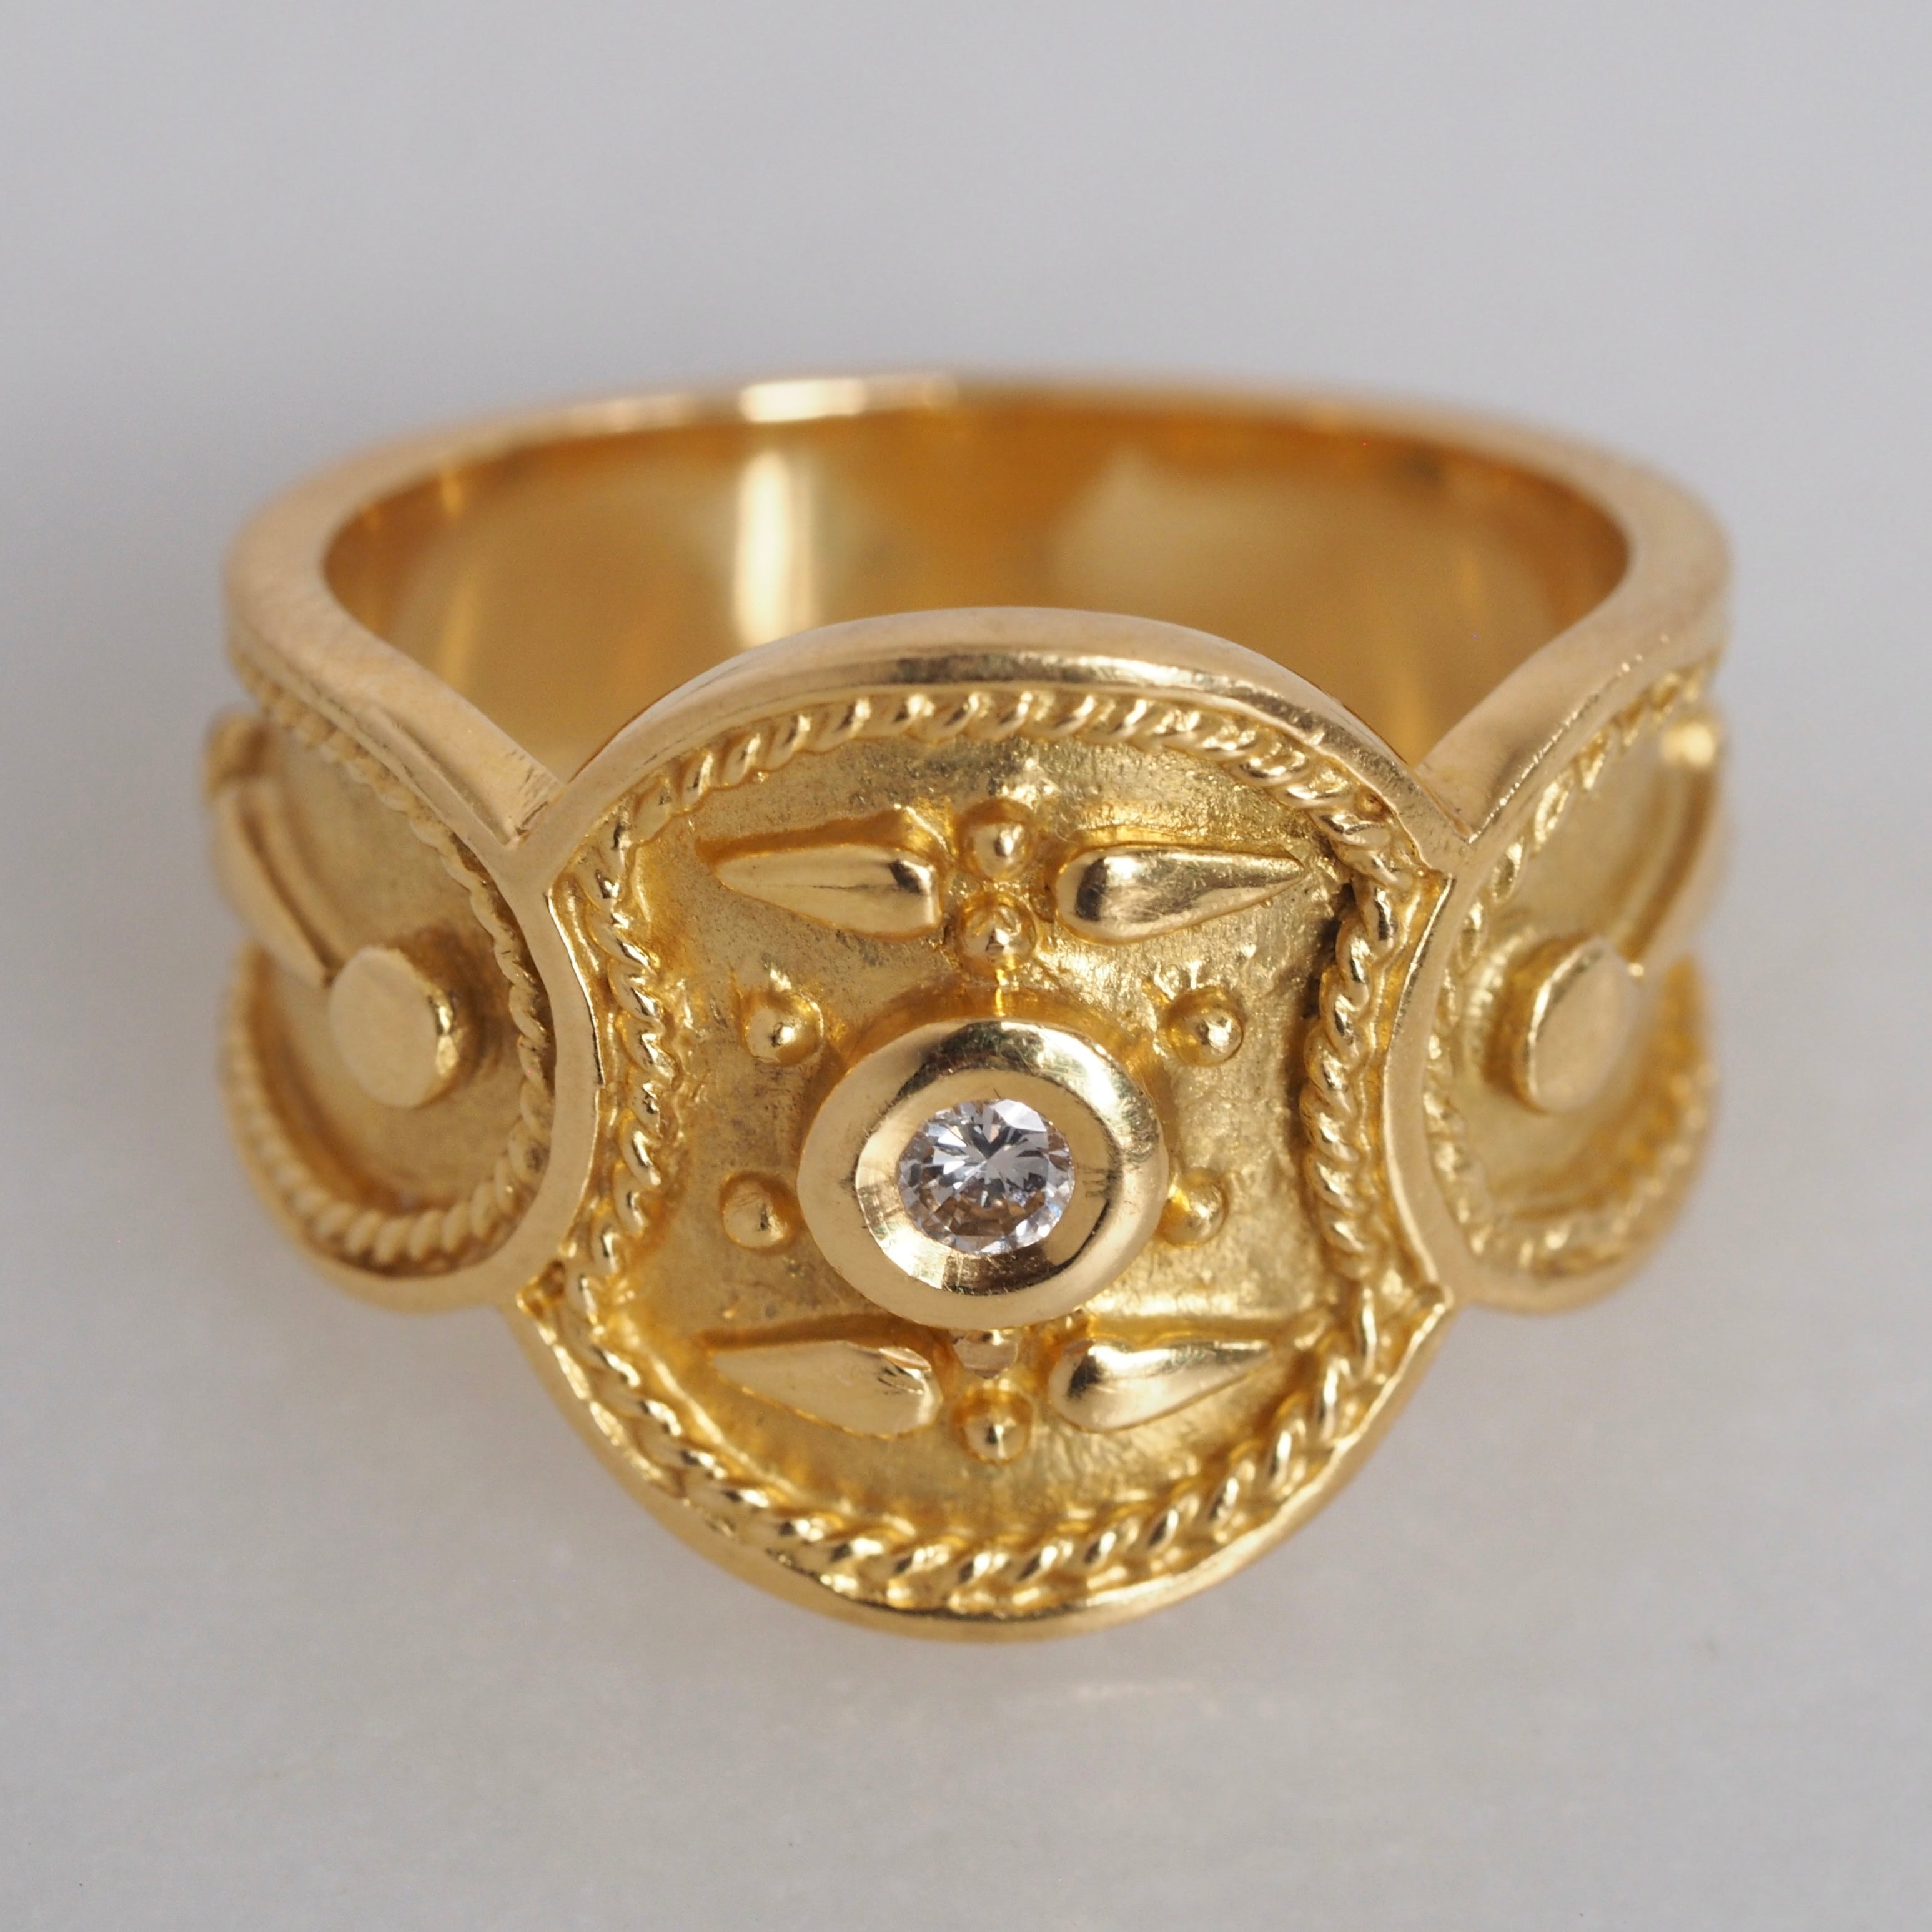 Vintage Portuguese 19k Gold and Bezel Set Diamond Ornate Ring